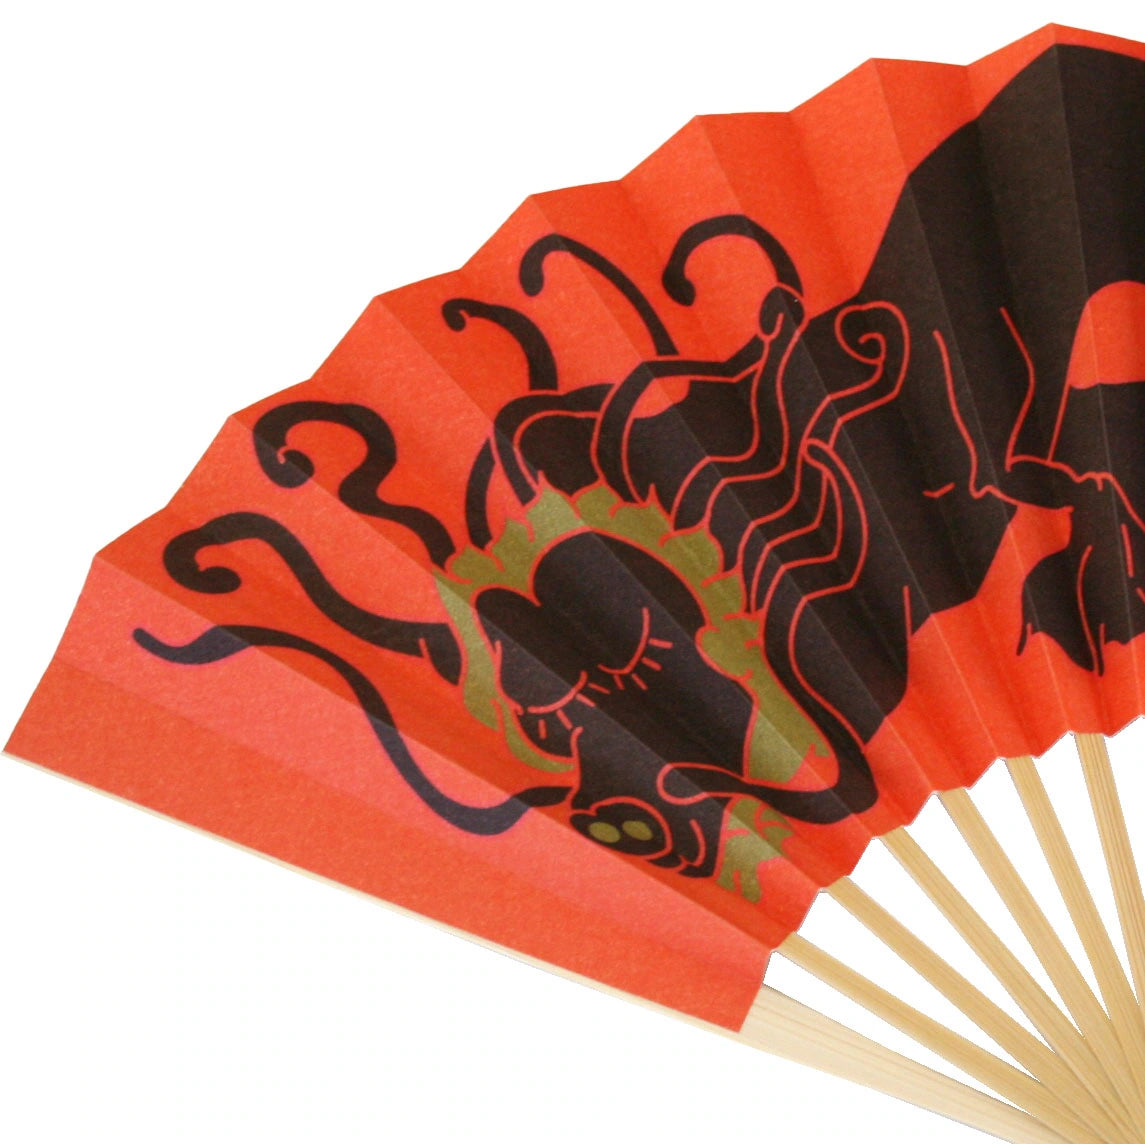 Edo fan (Jacues Averna 5) Chinese zodiac dragon